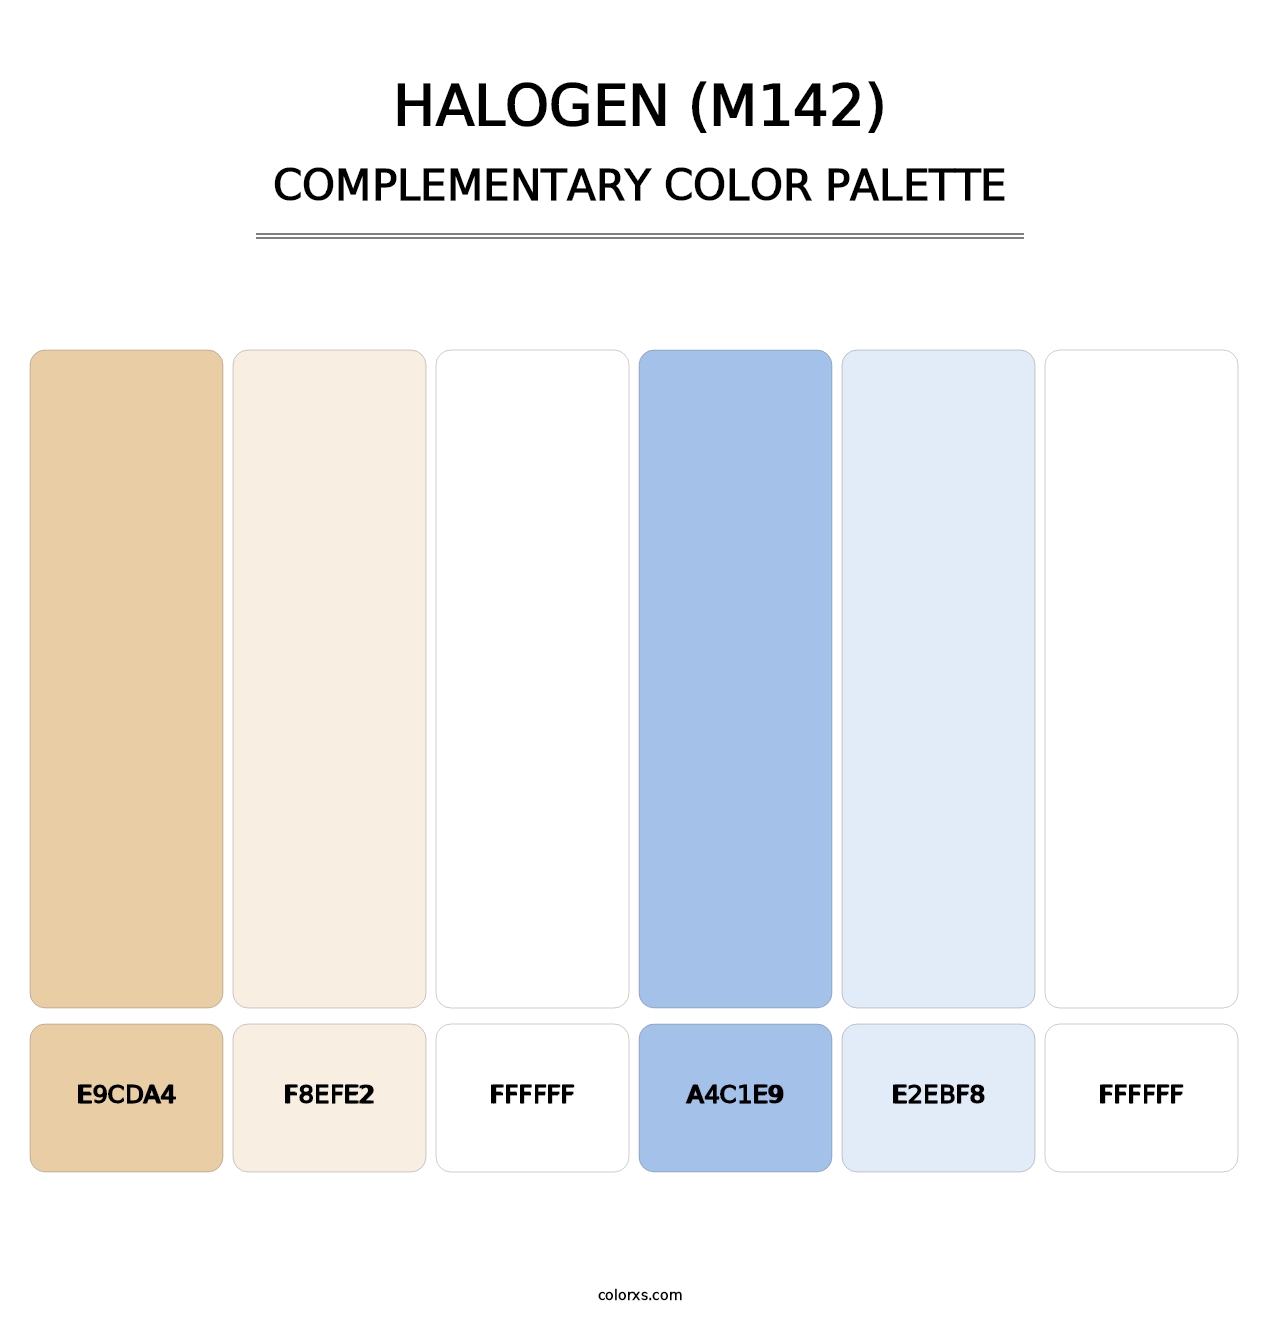 Halogen (M142) - Complementary Color Palette